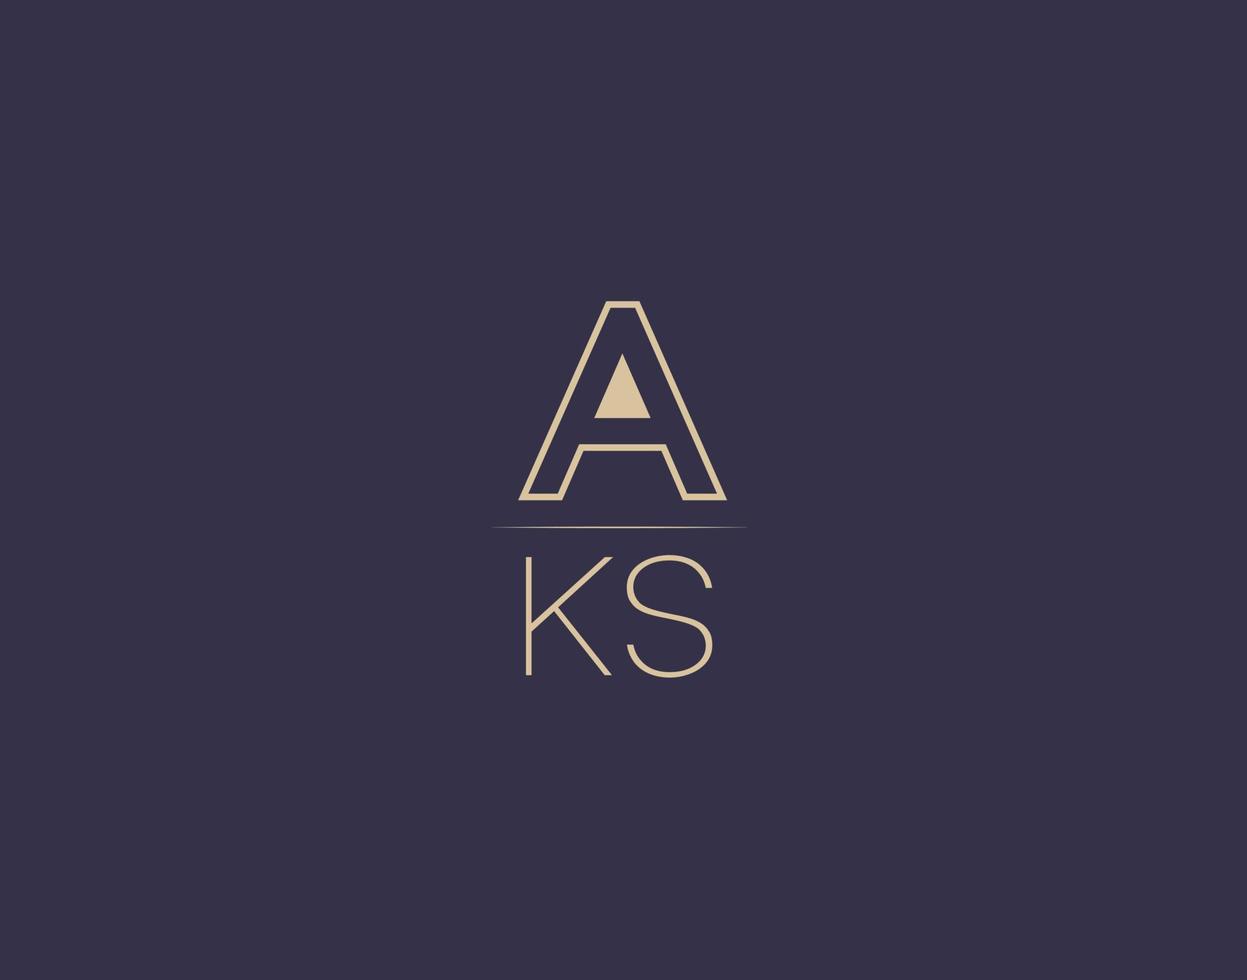 aks letter logo design moderno minimalista vector imágenes